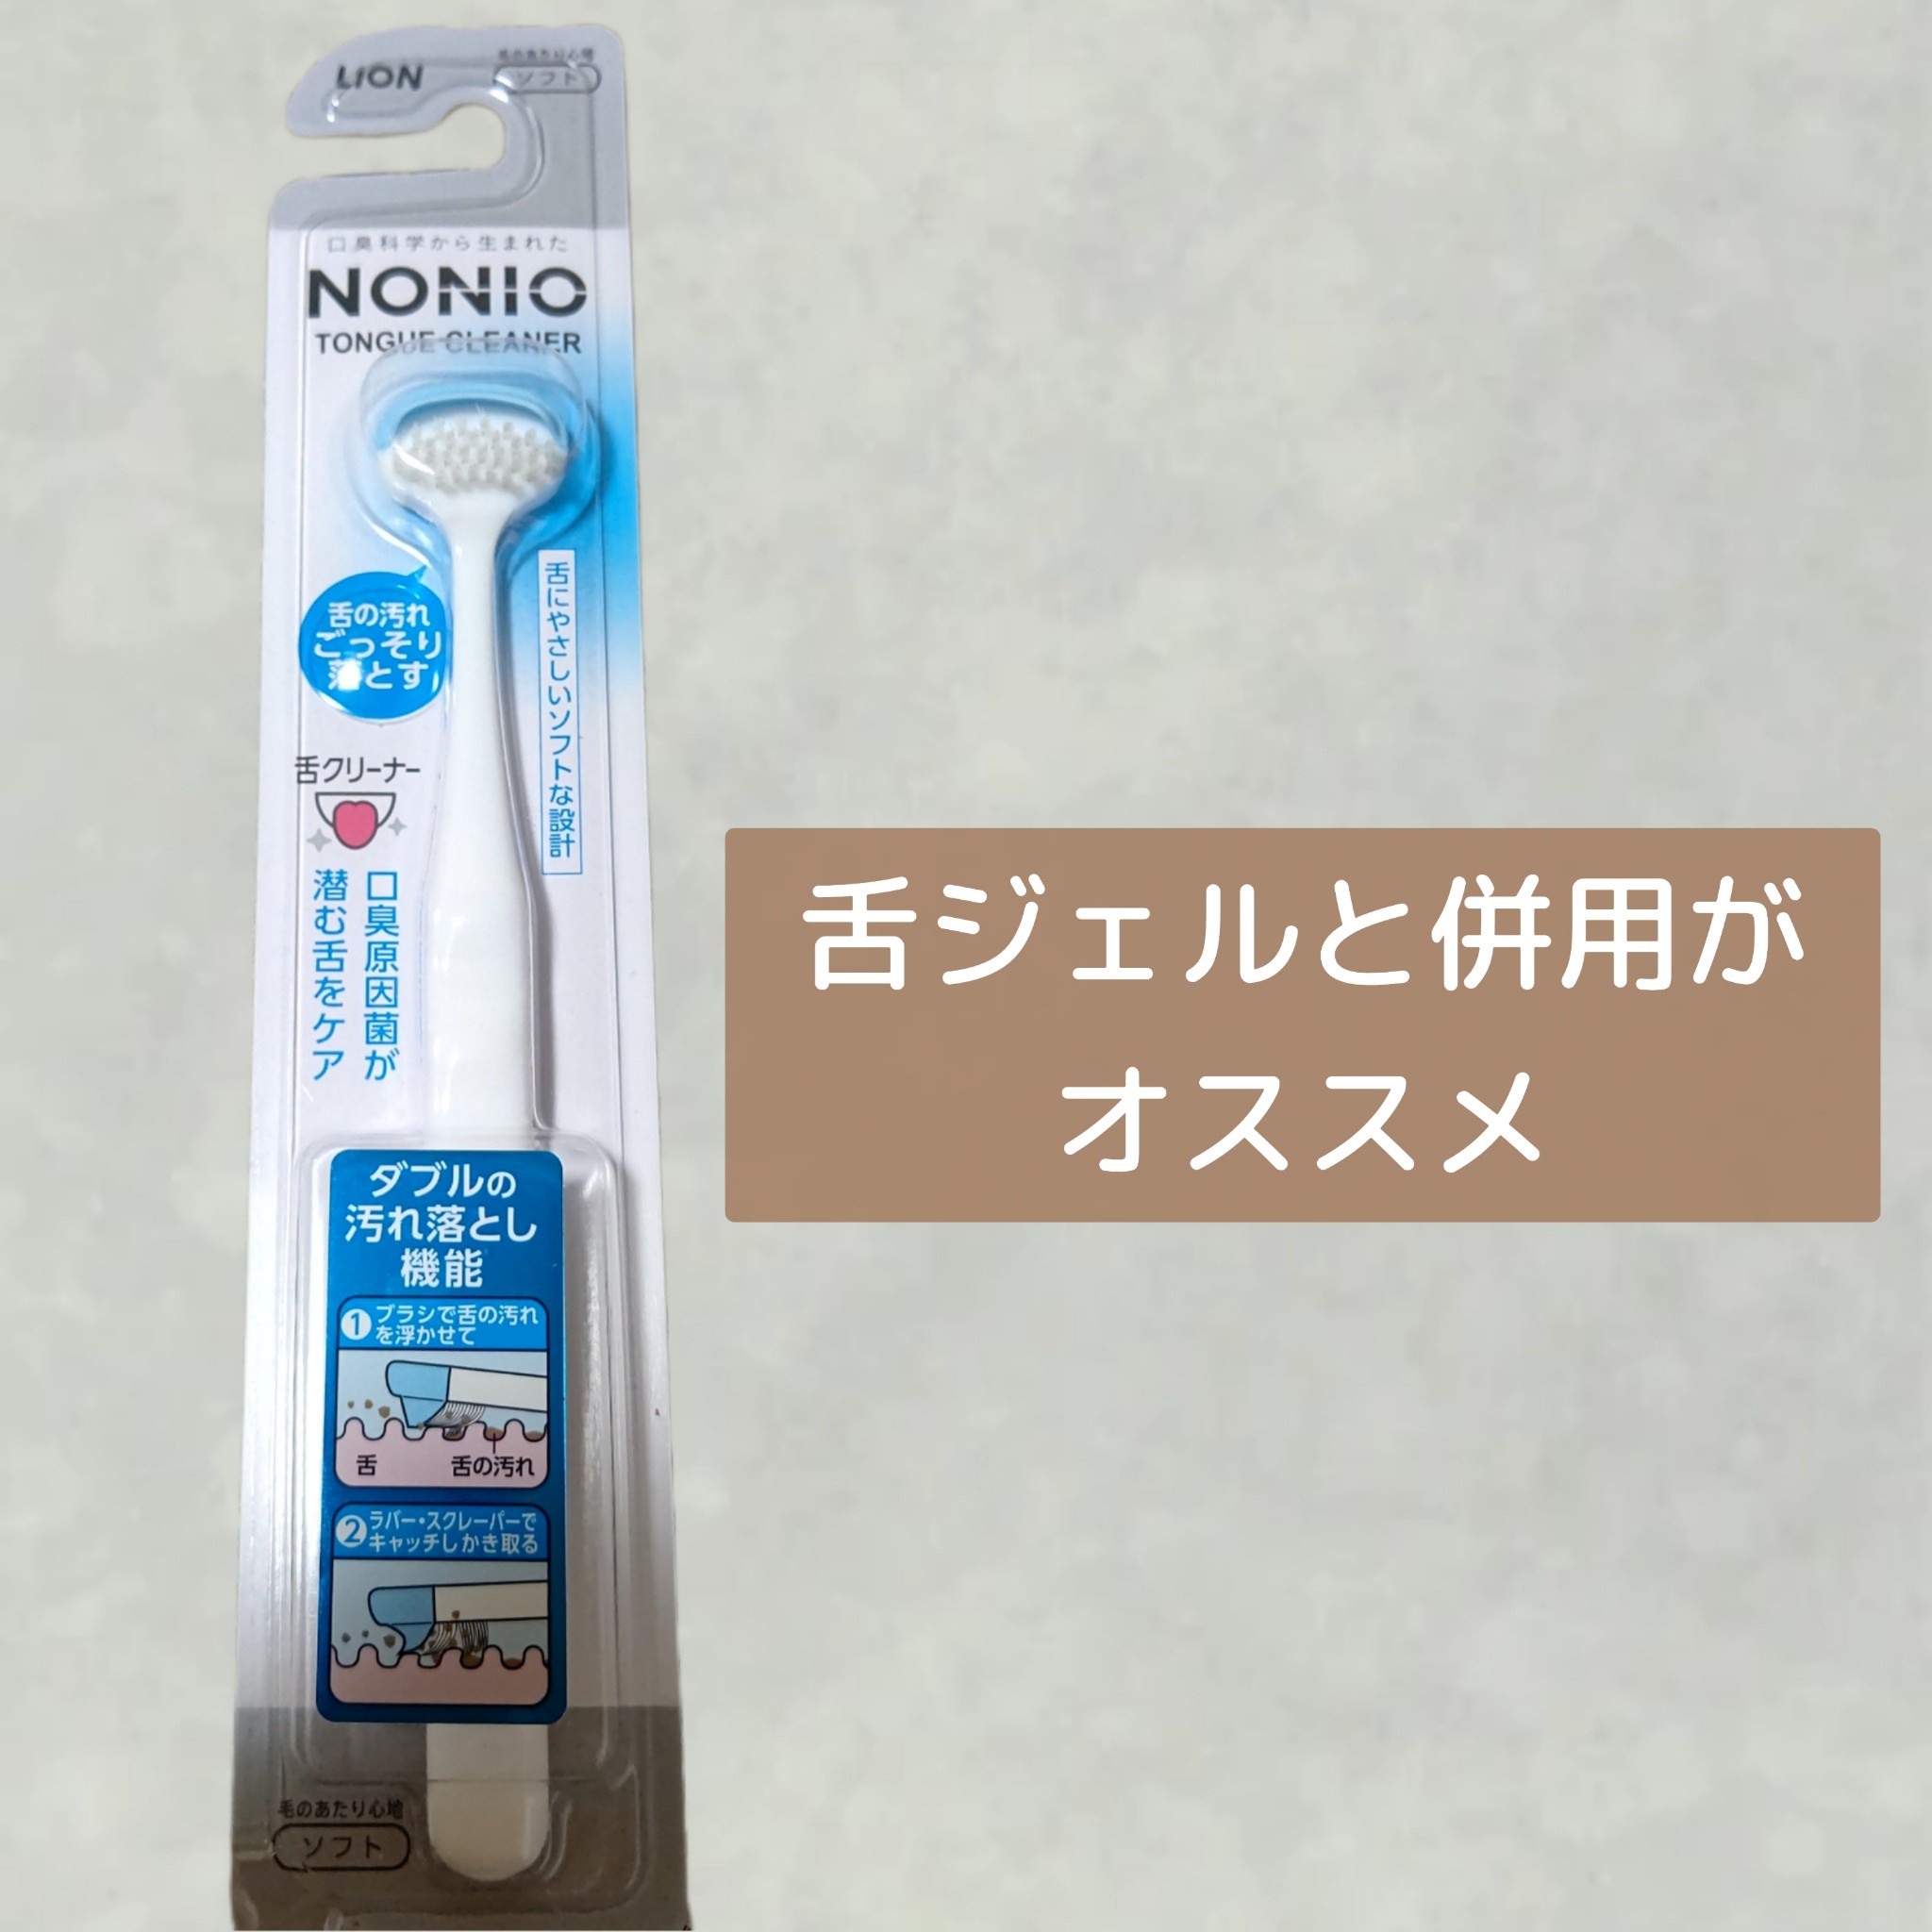 NONIO / NONIO 舌クリーナーの公式商品情報｜美容・化粧品情報はアットコスメ